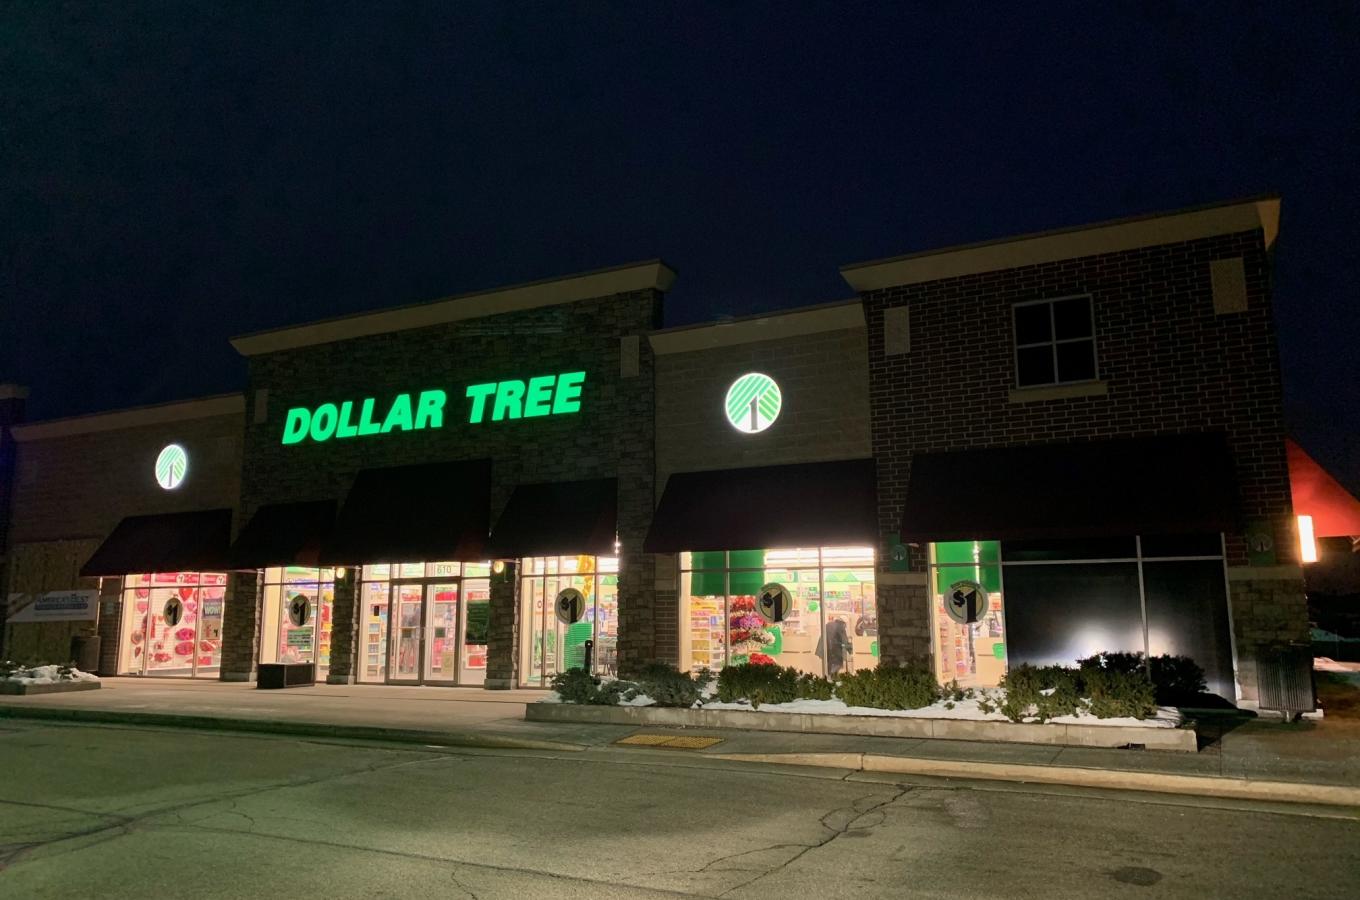 Dollar Tree Exterior